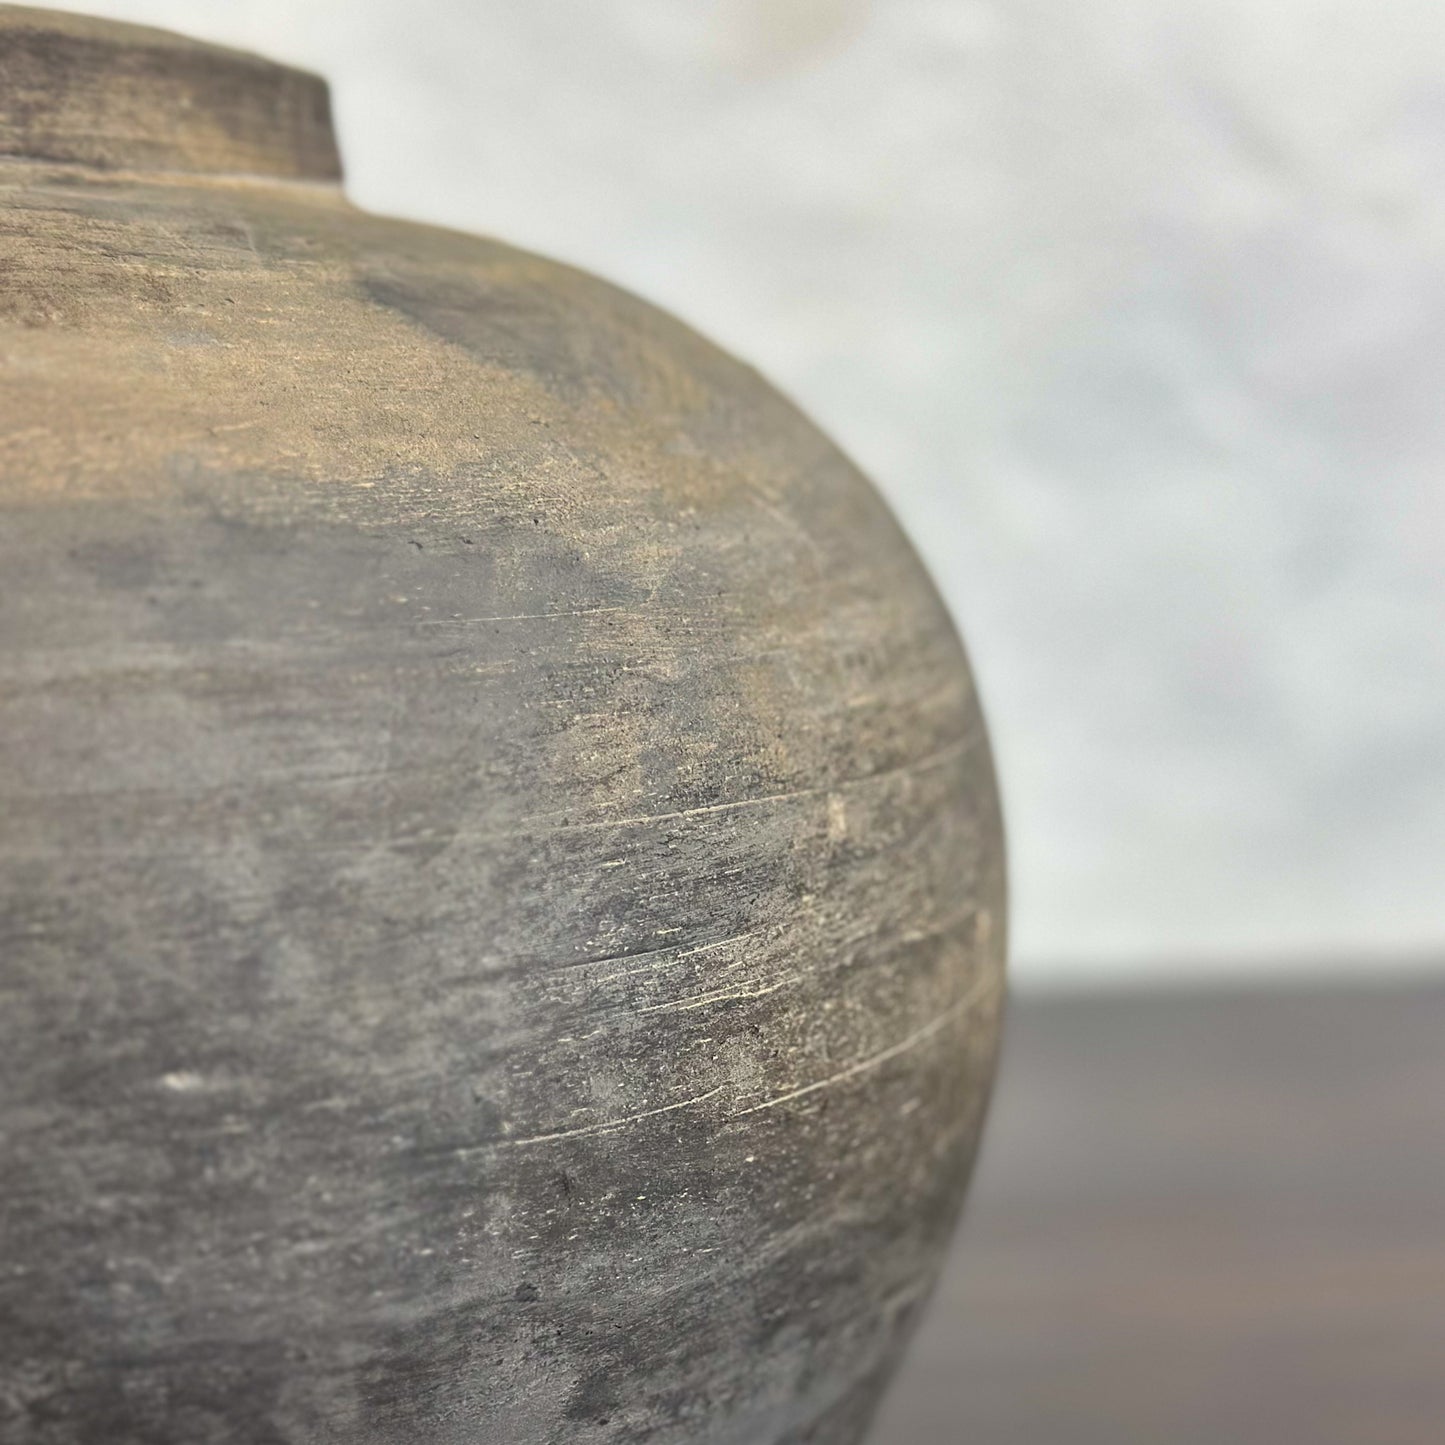 Round Squat Earthenware Vase